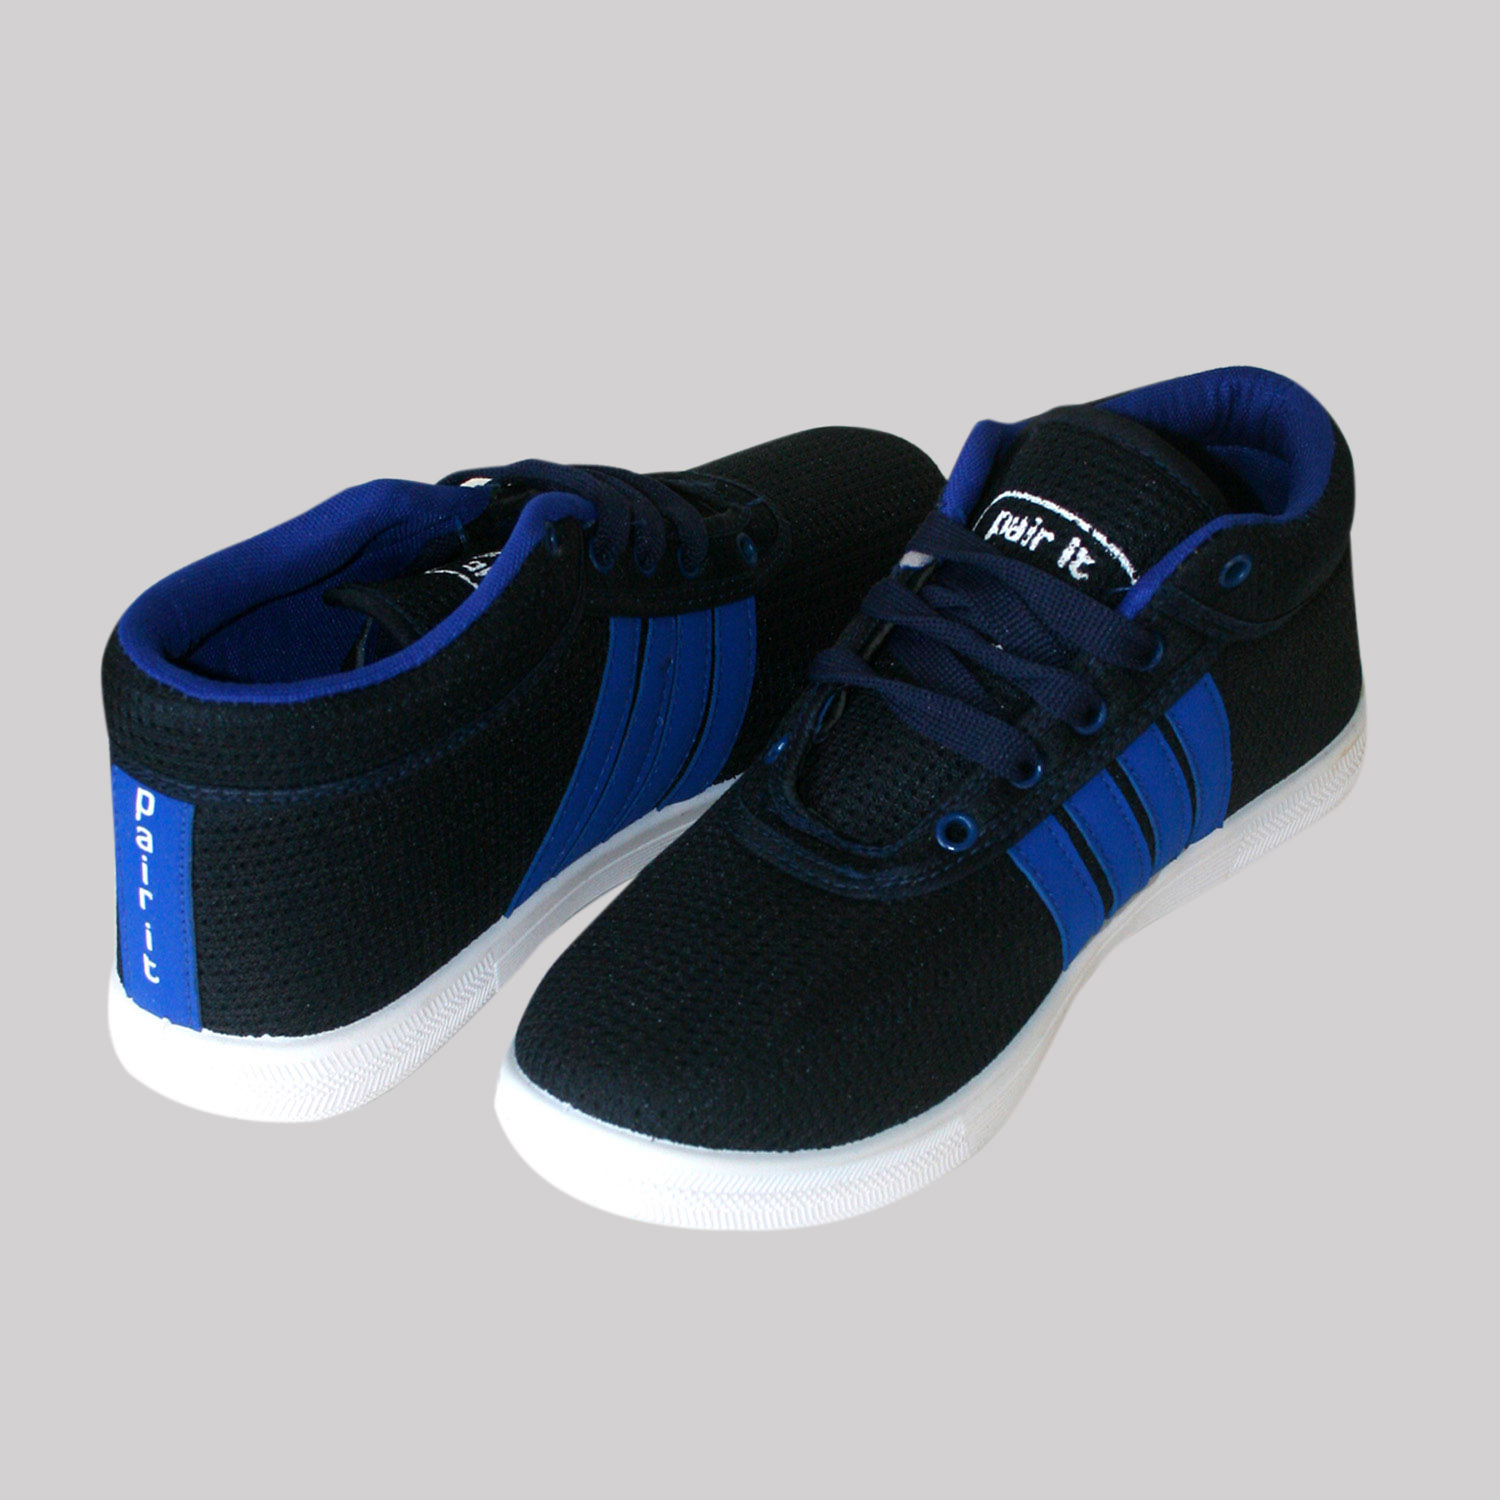 Pair-it Men's PVC Casual Shoe-DP-Casual008-Black